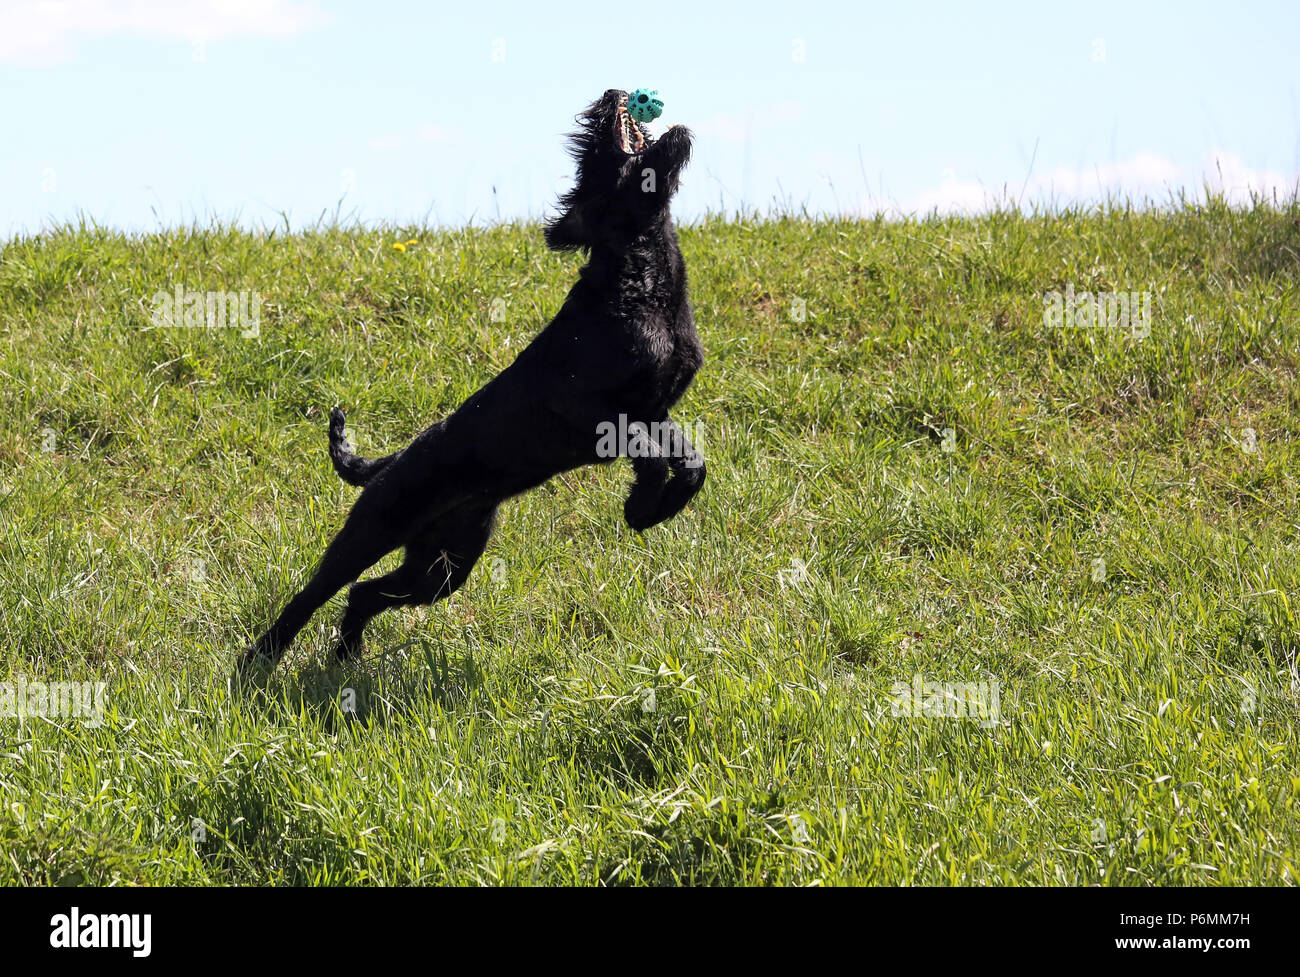 Graditz, Germany - Riesenschnauzer catches a ball Stock Photo